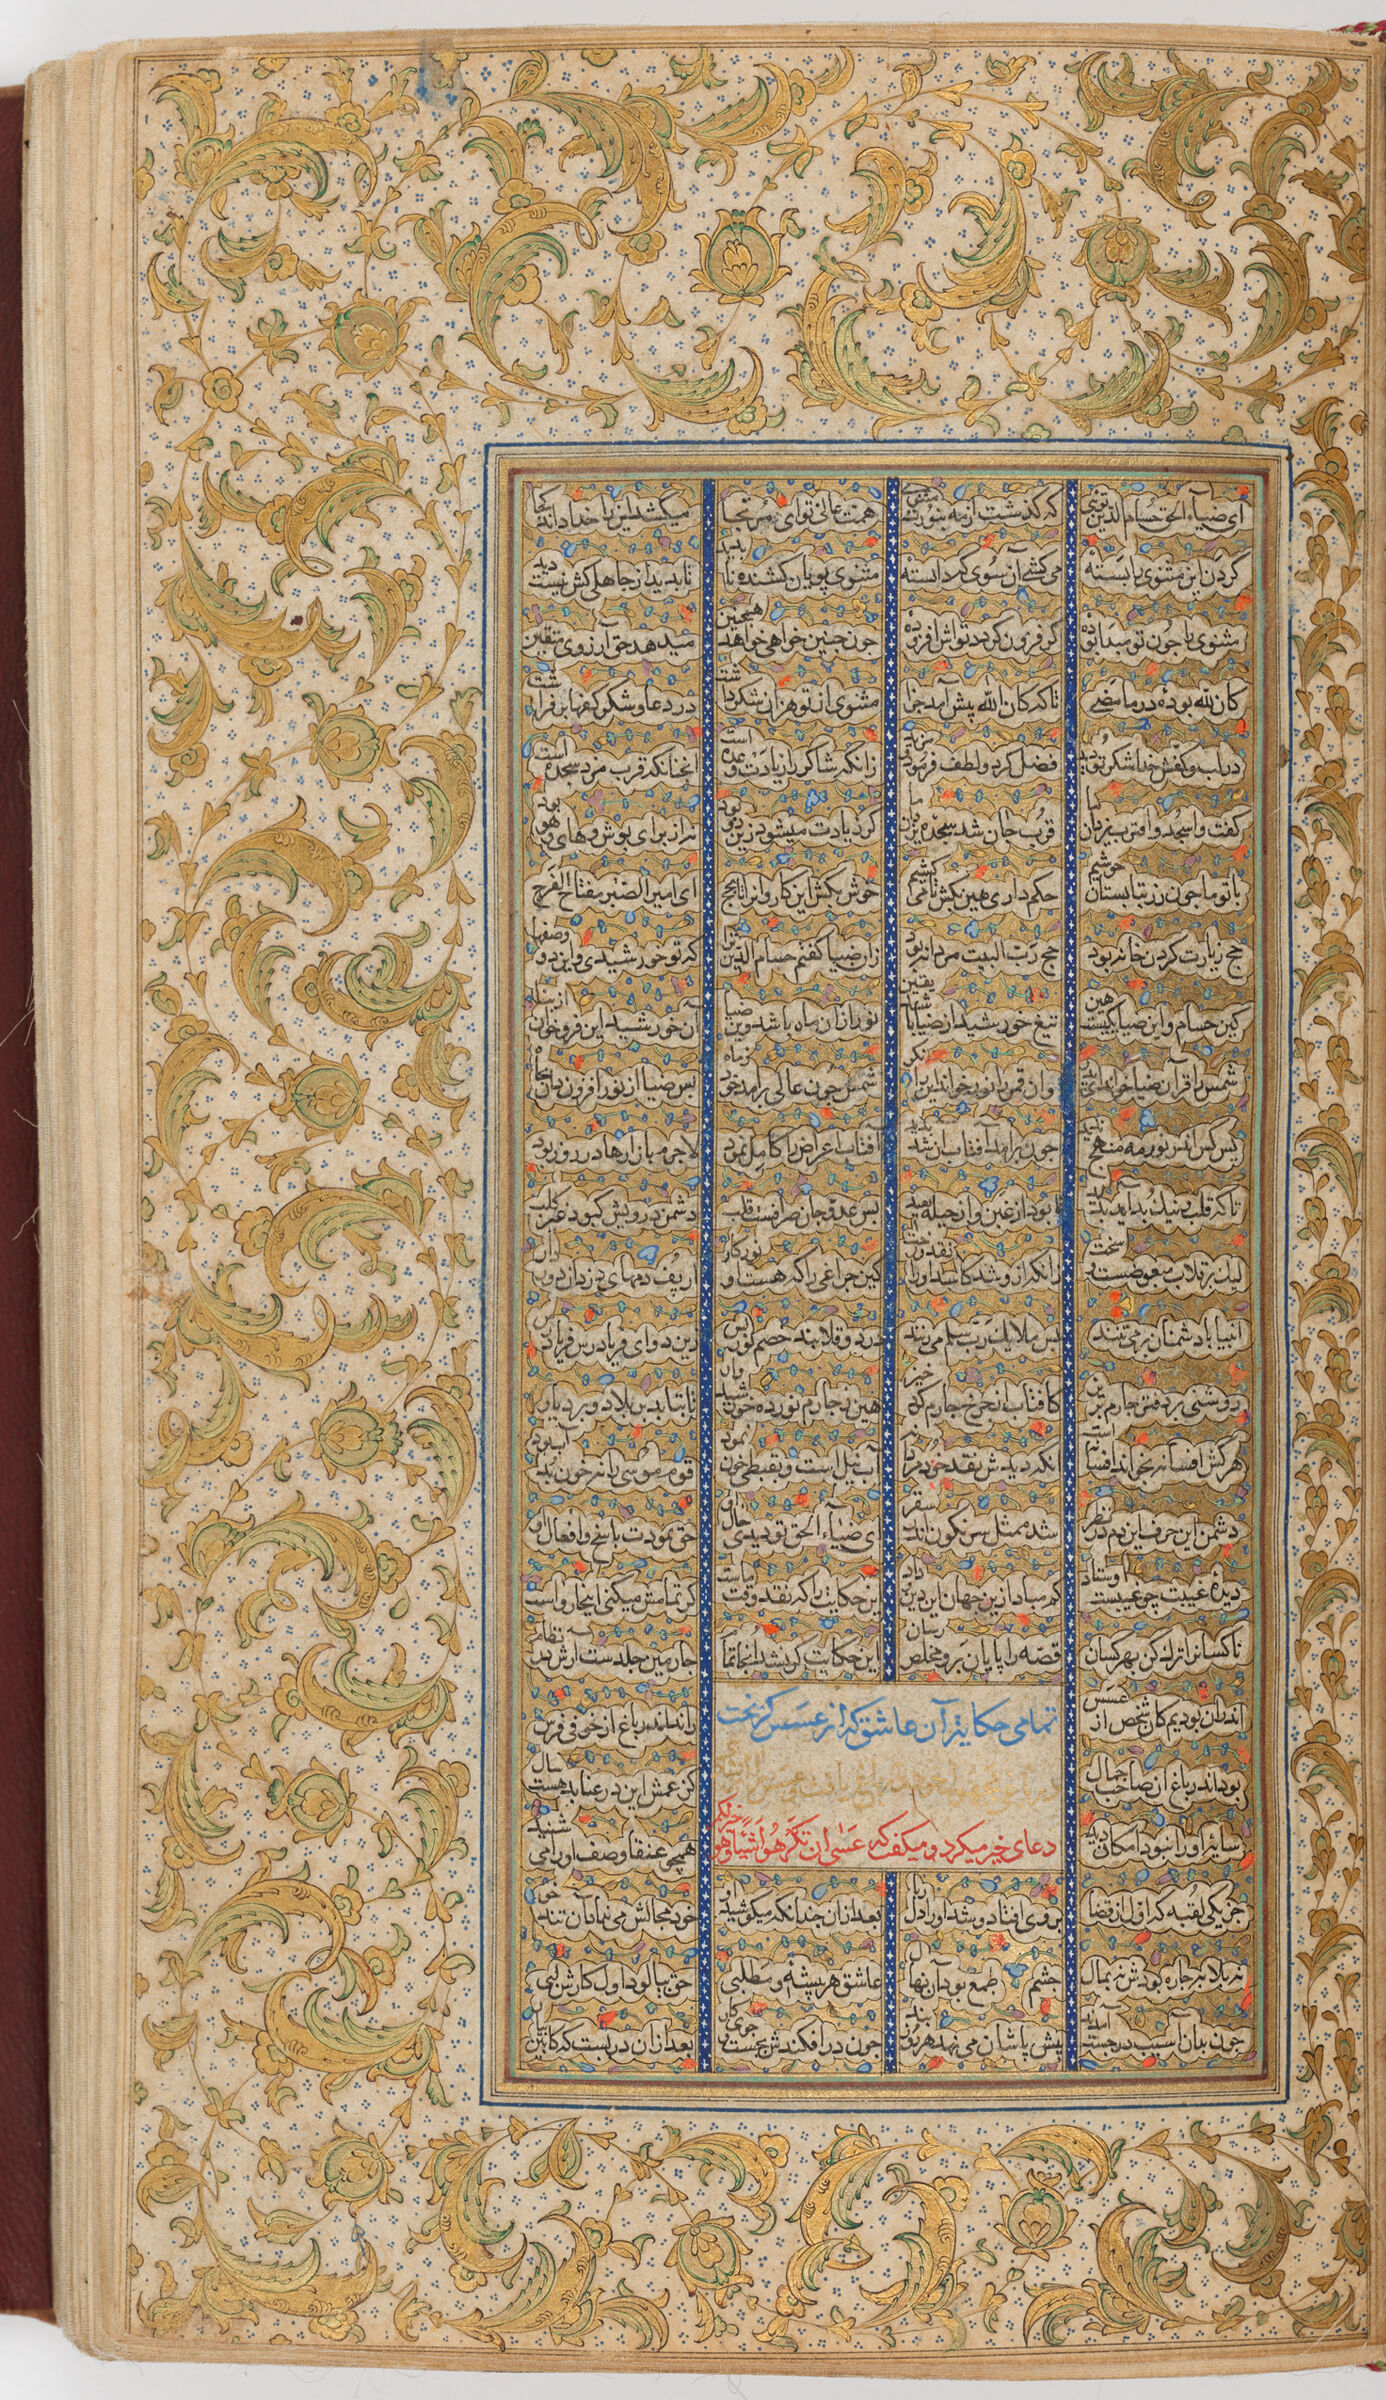 Illuminated Margin And Interlinear Gilt Text (Illumination And Gilt Recto; Text Verso Of Folio 146), Folio From A Manuscript Of The Mathnavi Ma‘navi By Maulana Jalal Al-Din Rumi